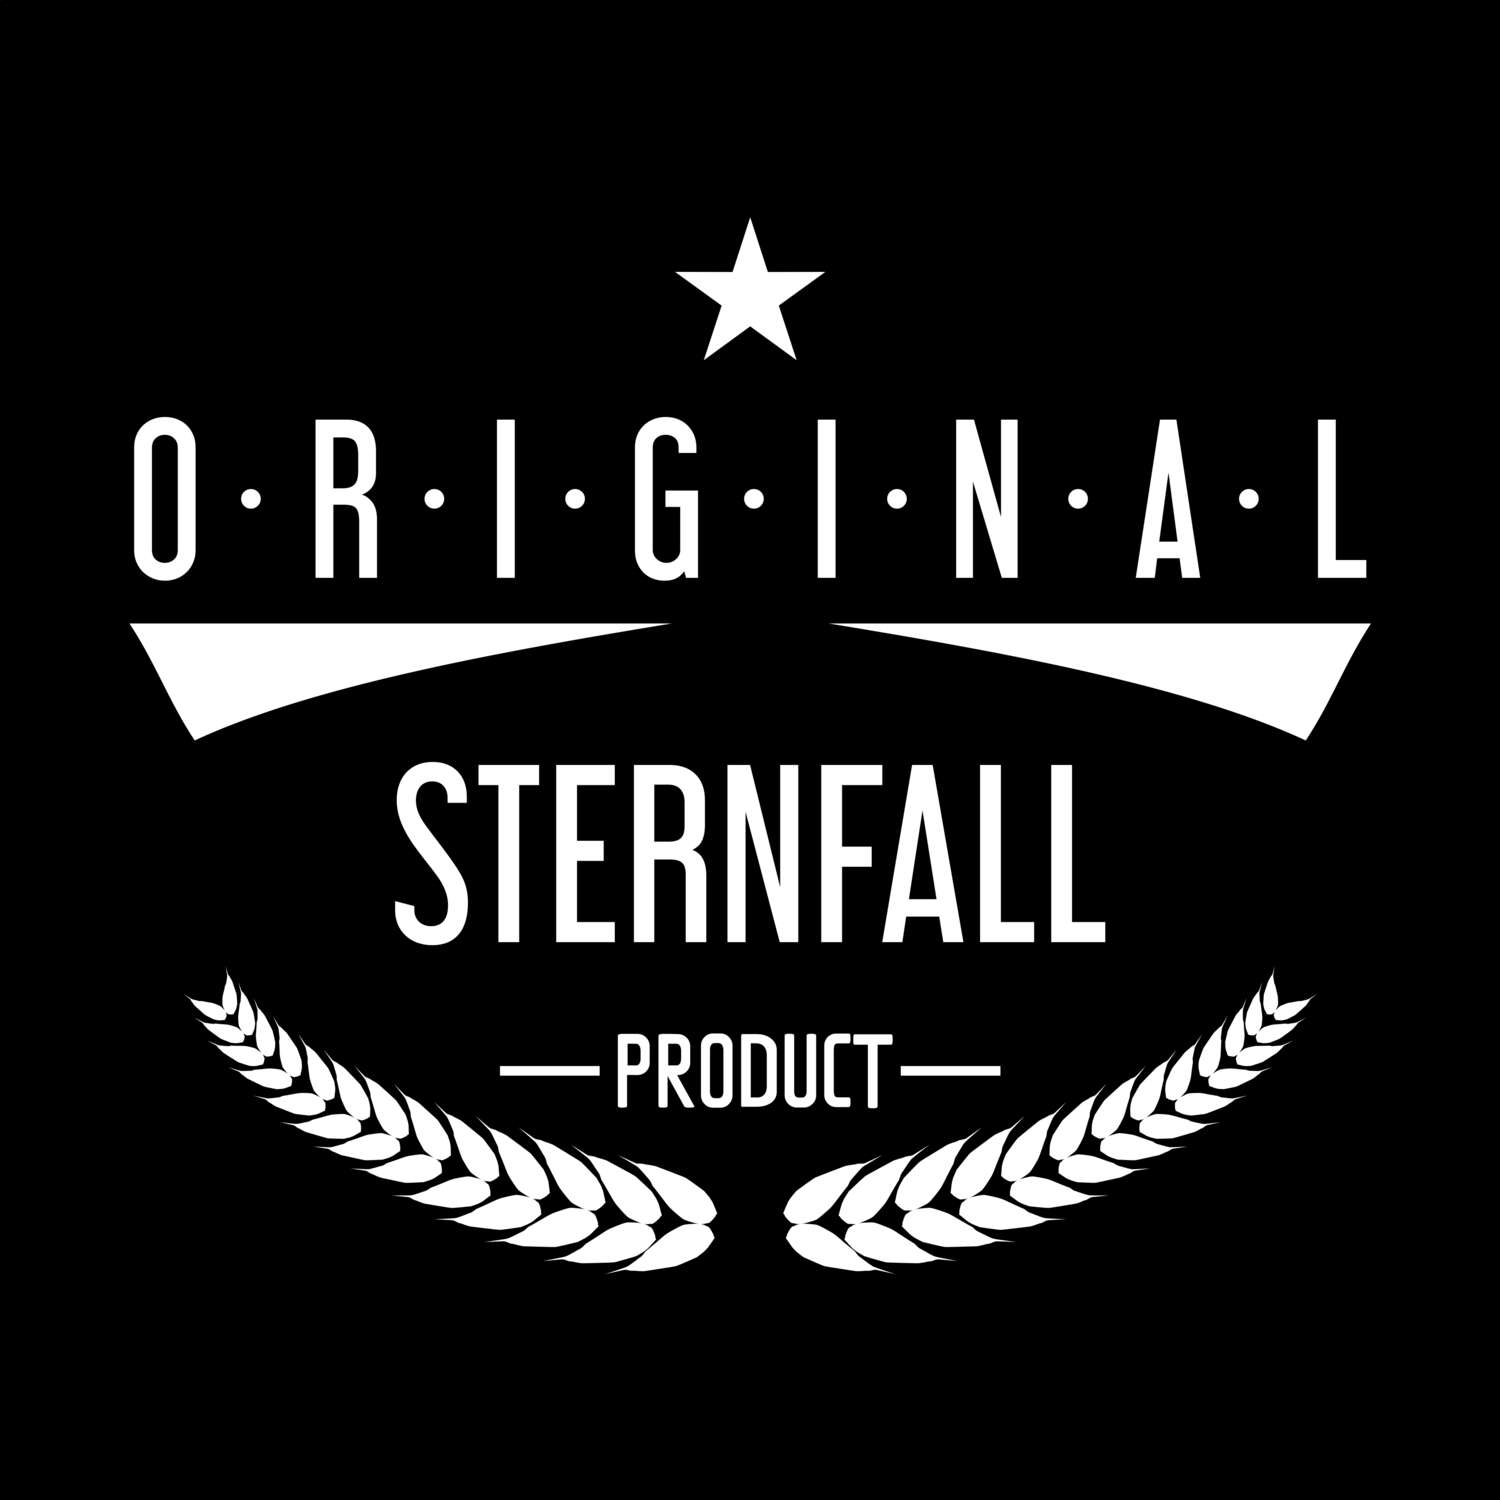 Sternfall T-Shirt »Original Product«